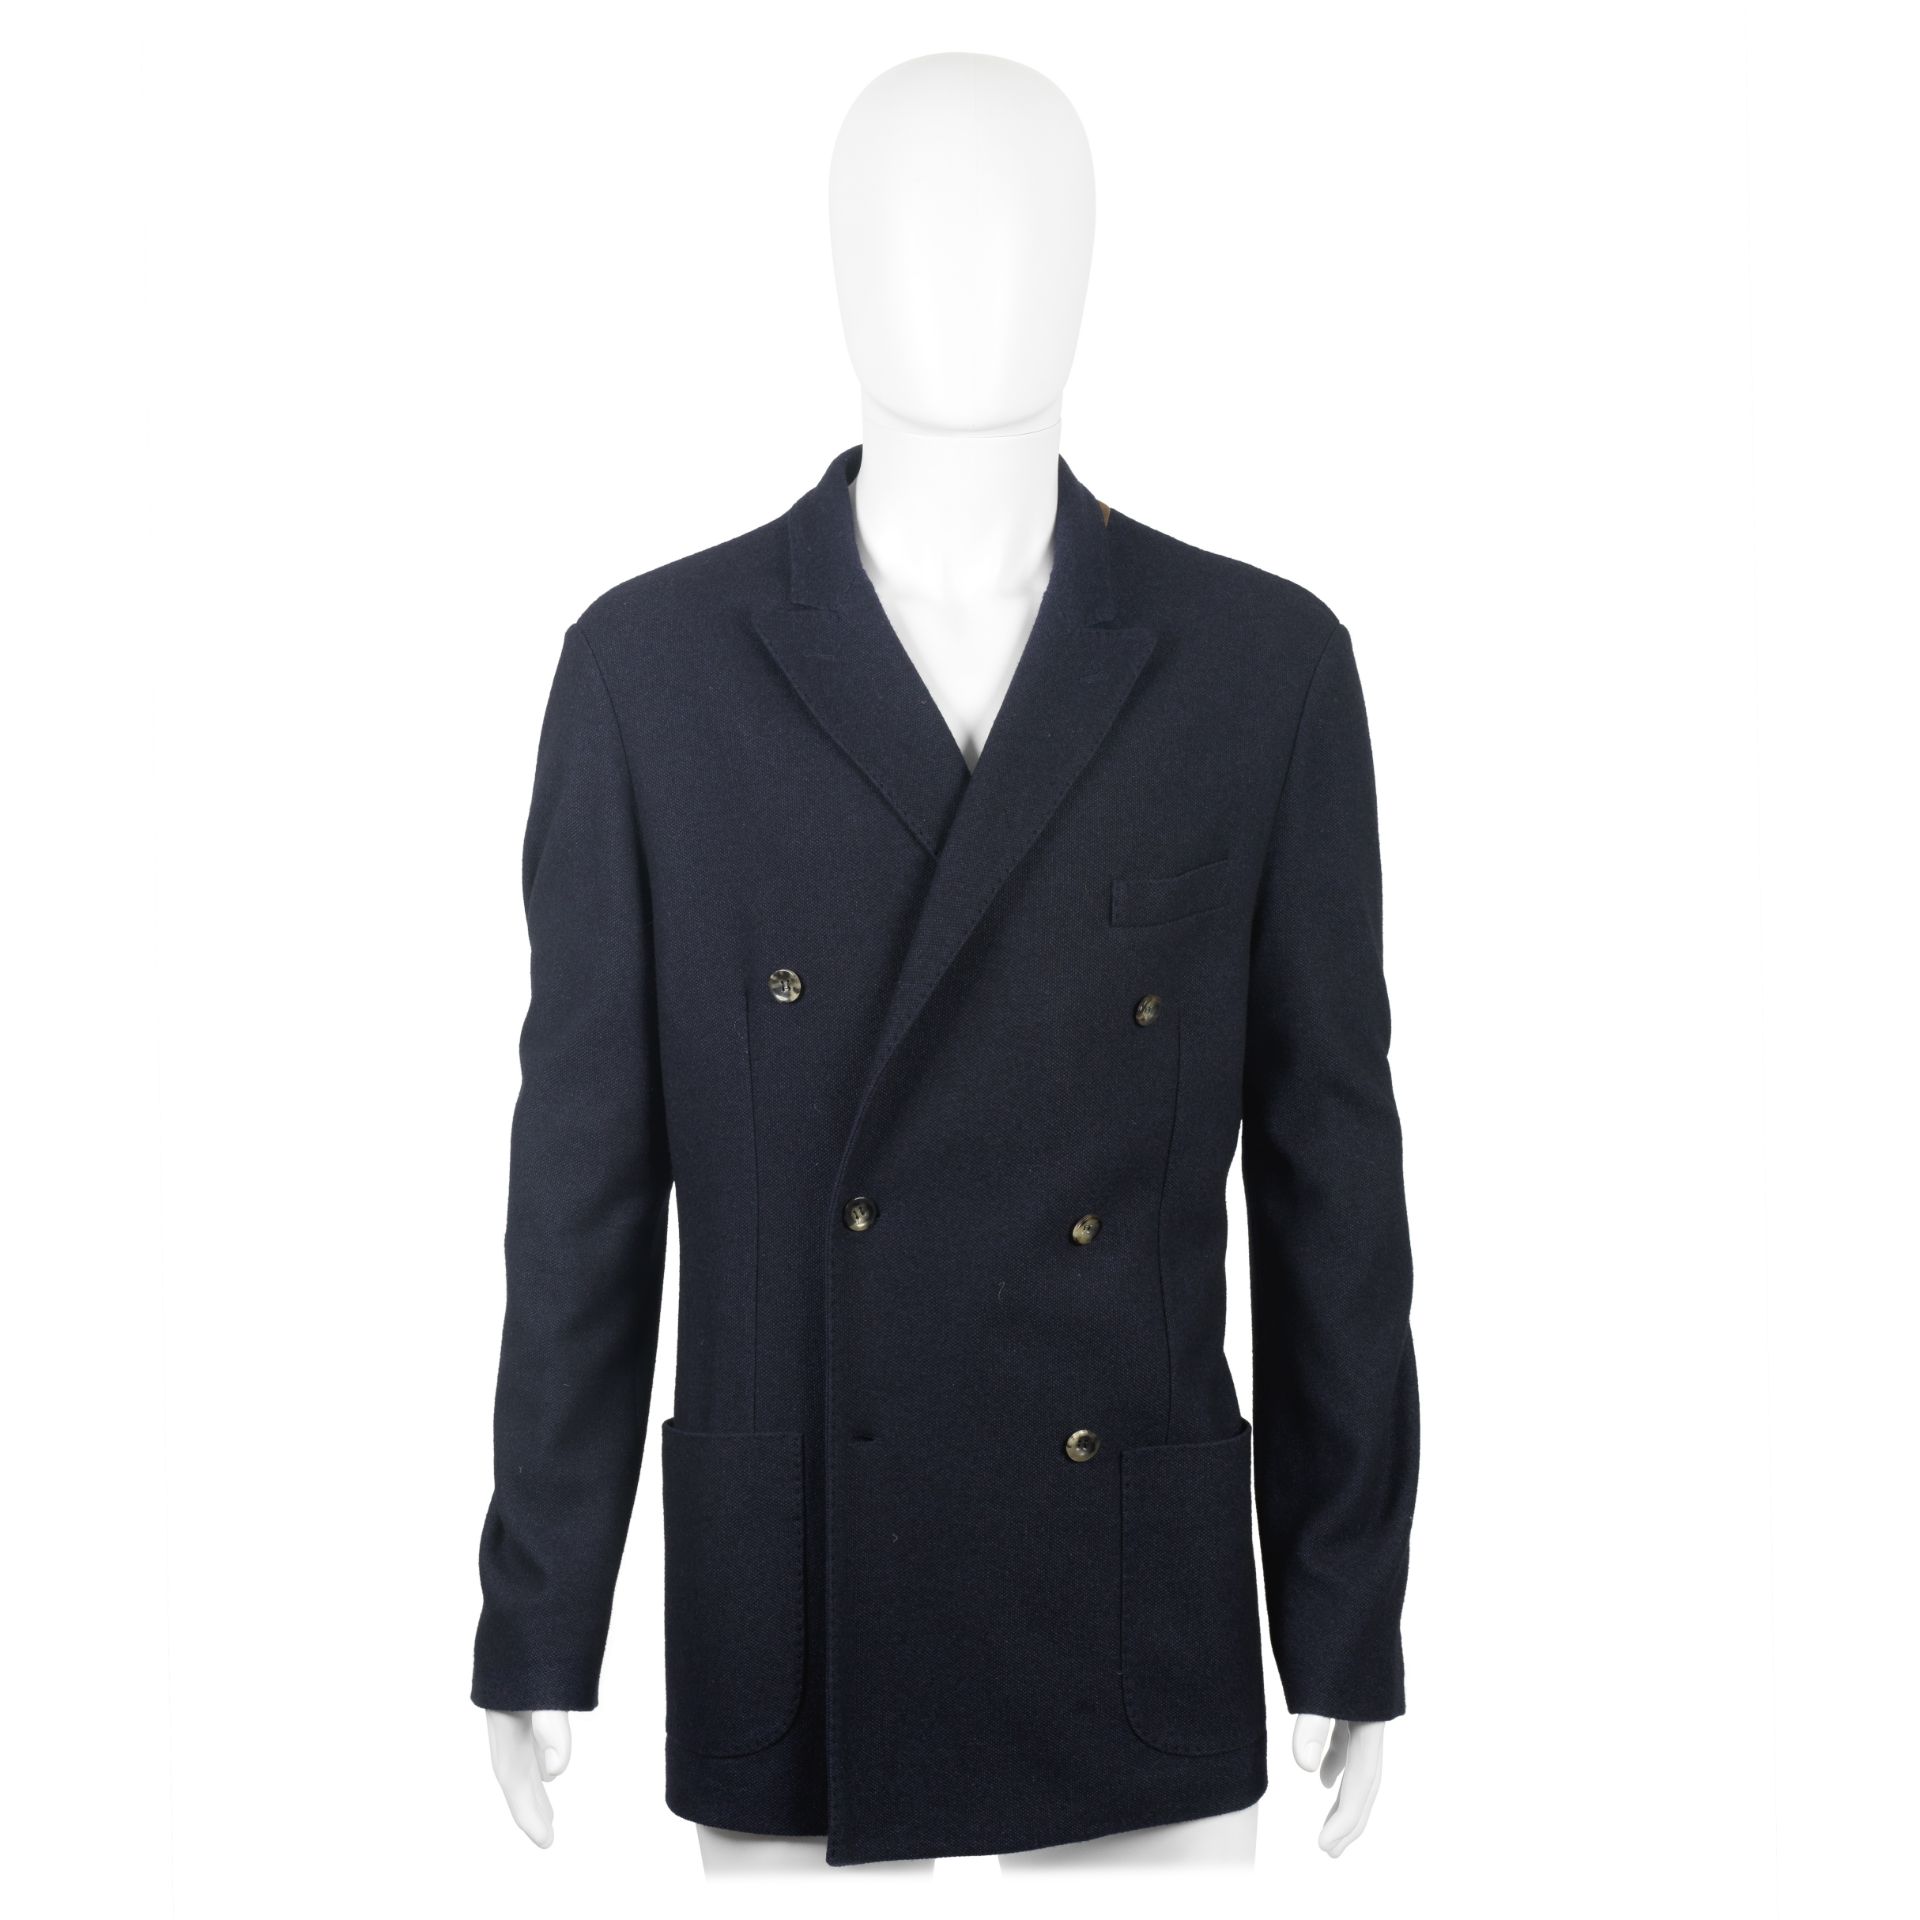 Loro Piana: a Men's Blue Cashmere and Silk Jacket